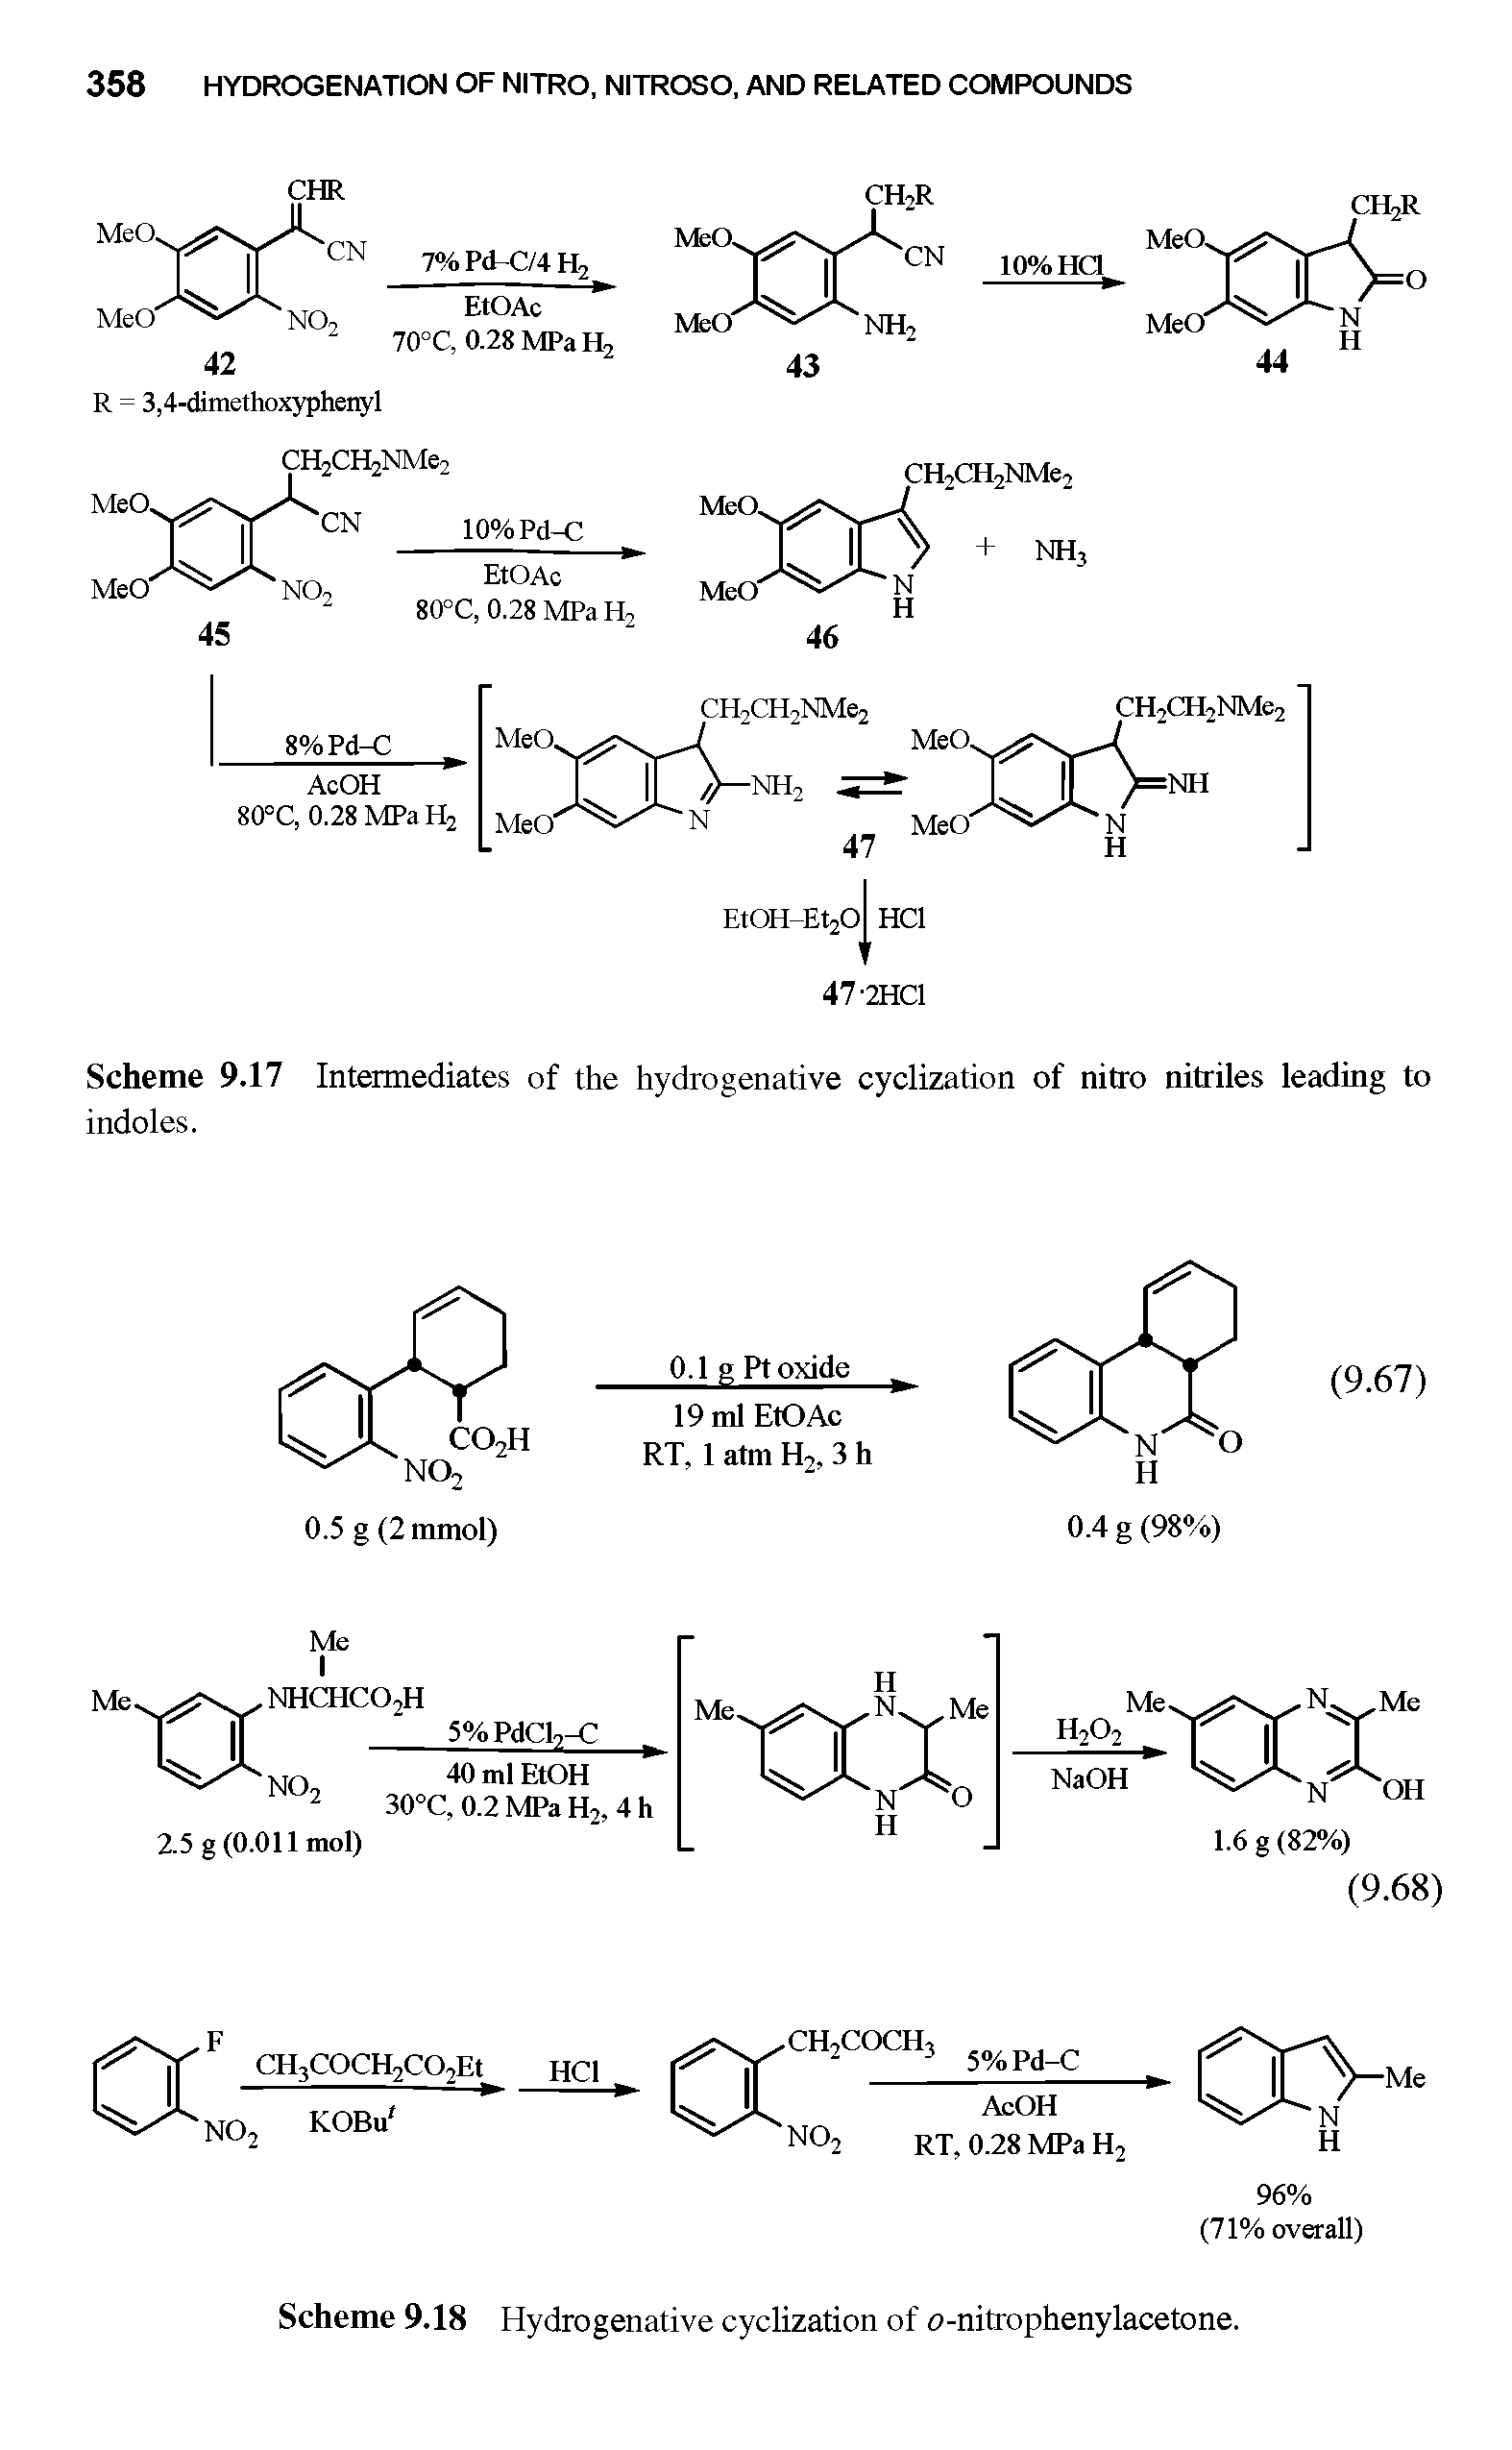 Scheme 9.17 Intennediates of the hydrogenative cyclization of nitro nitriles leading to indoles.